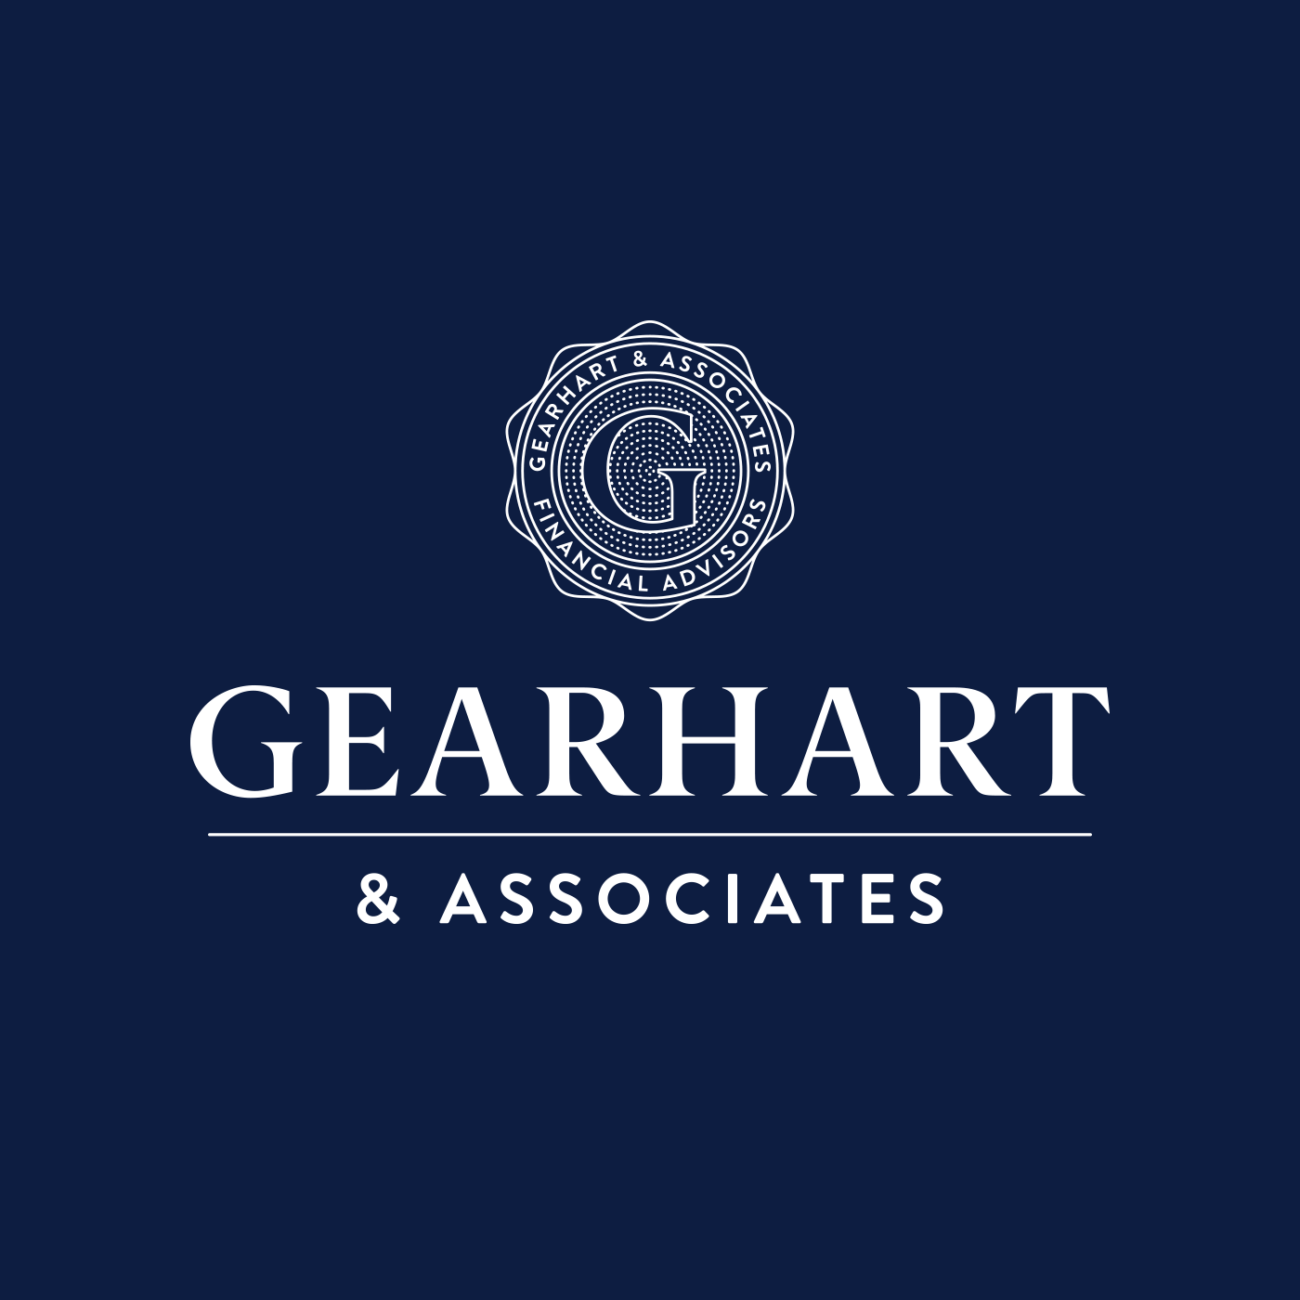 gearhart-logo-FI